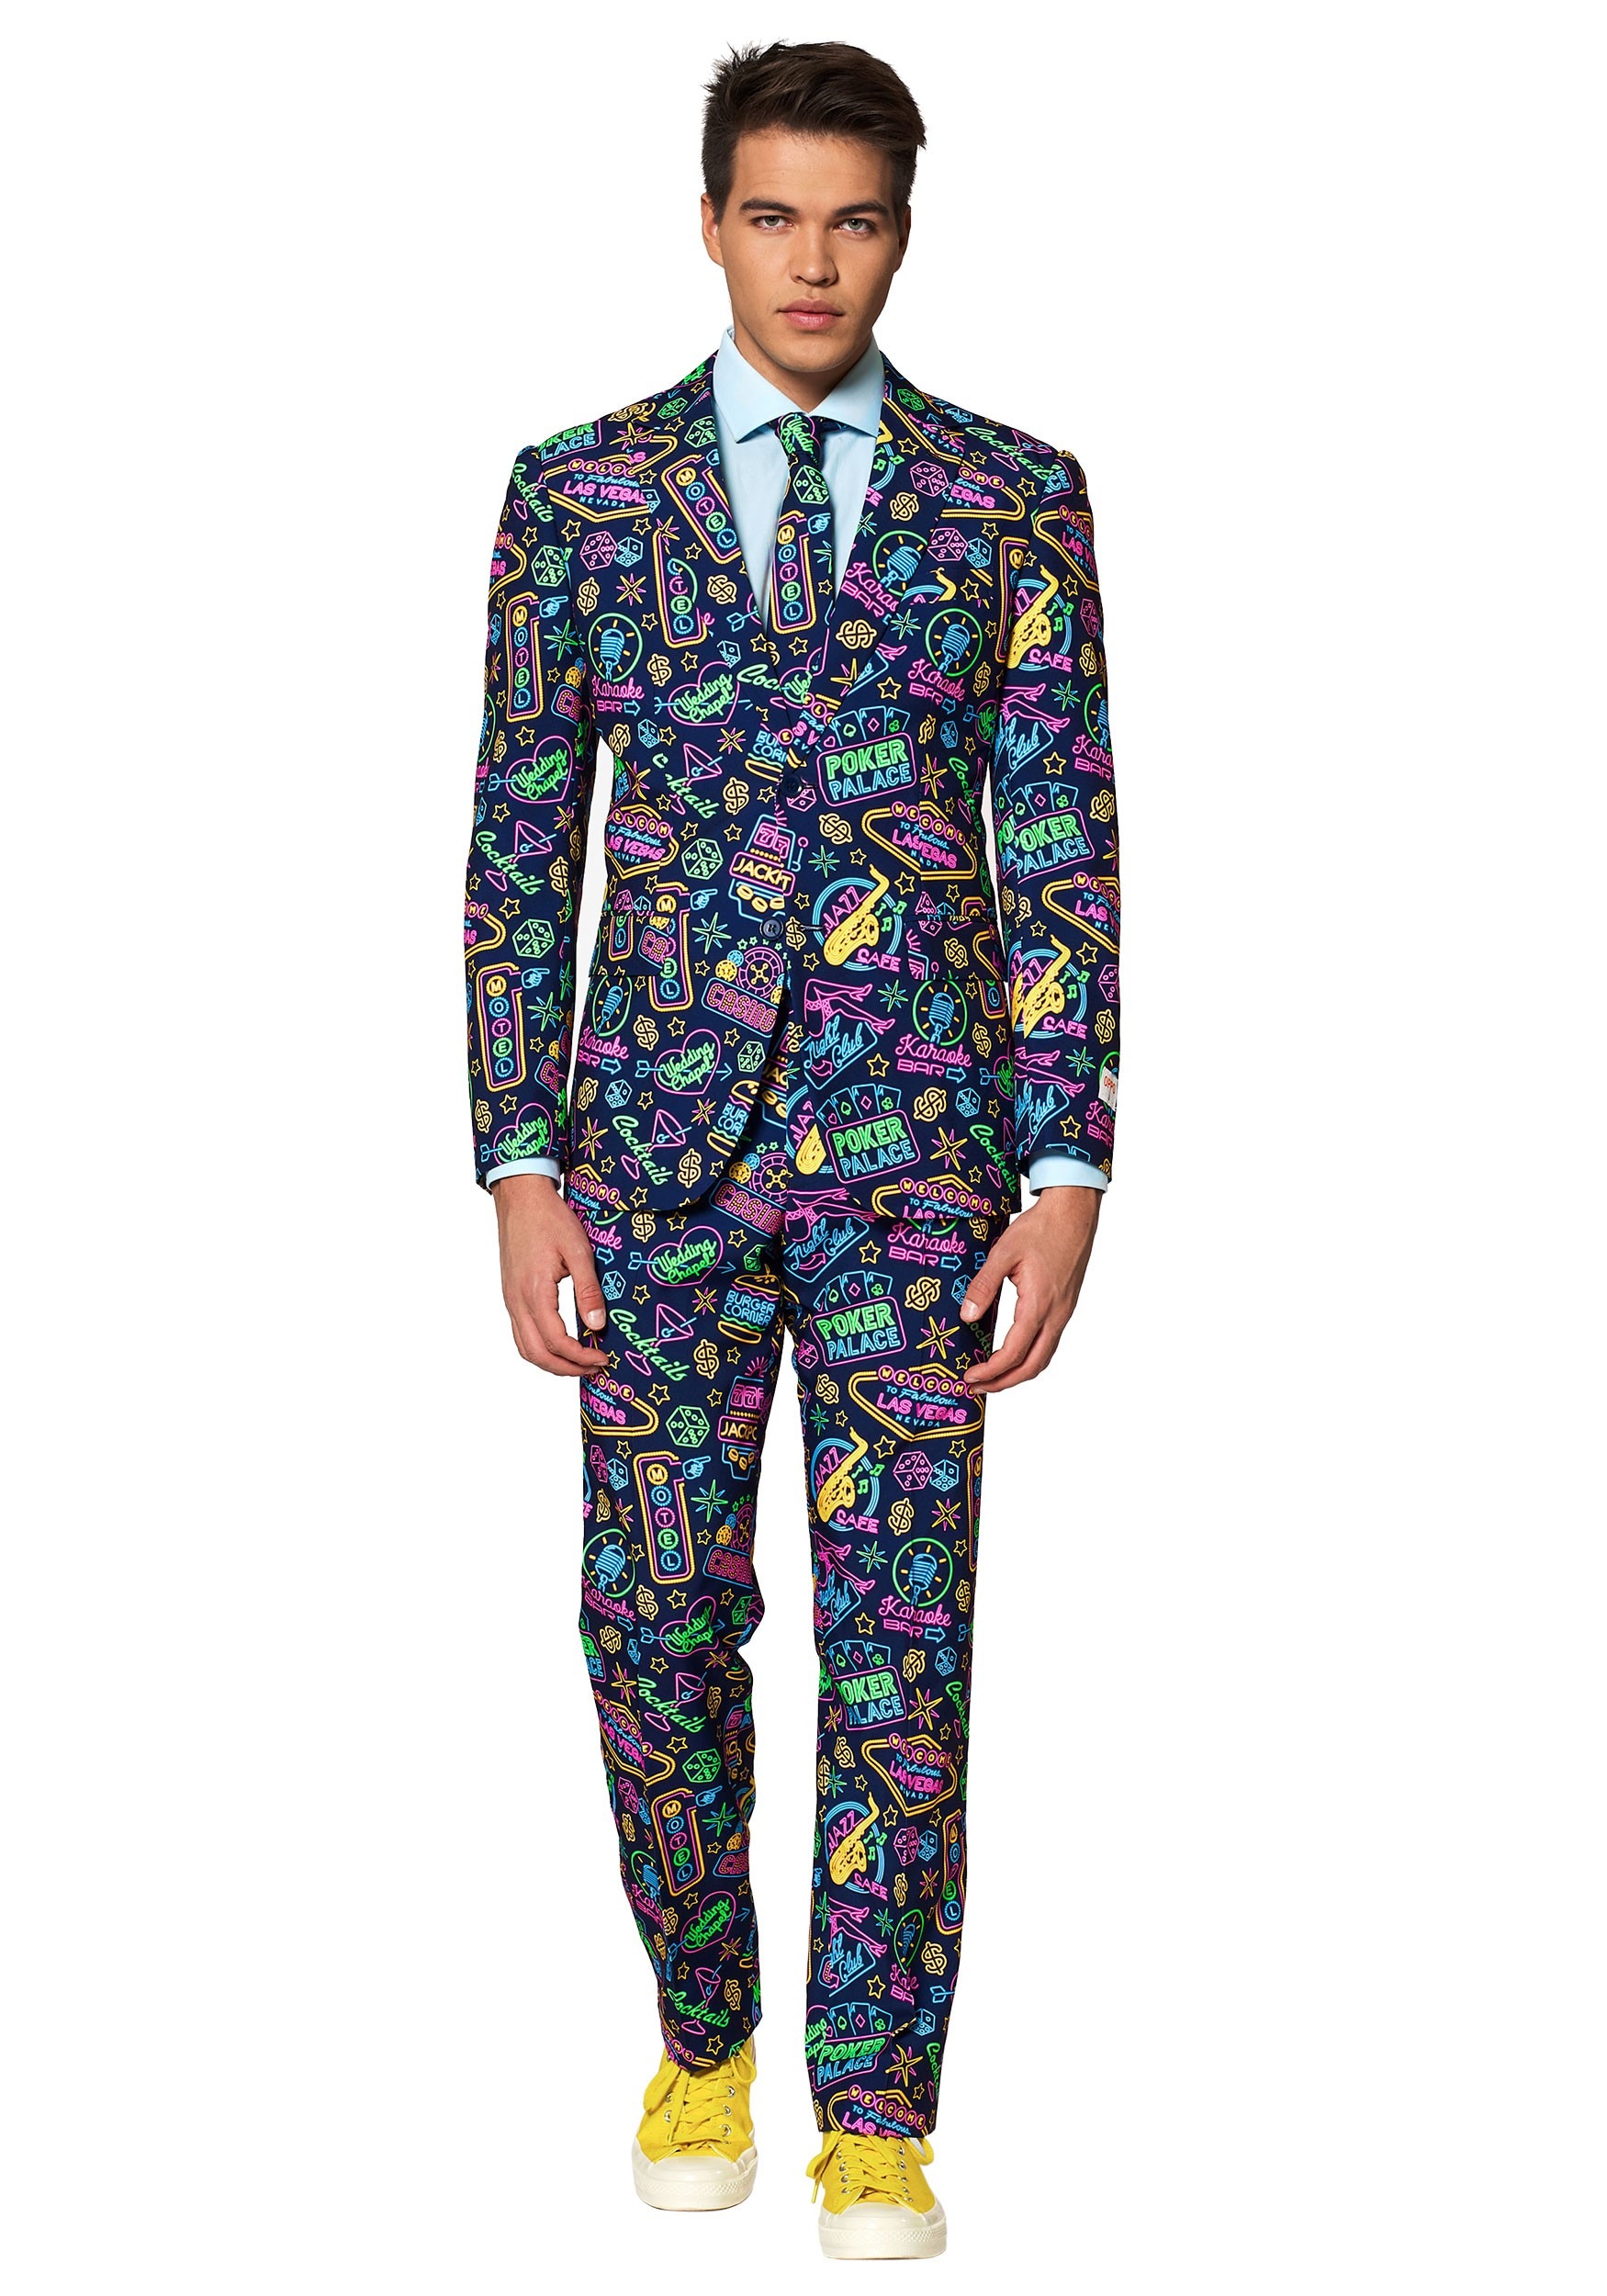 Mr. Vegas Men’s Suit by Opposuit